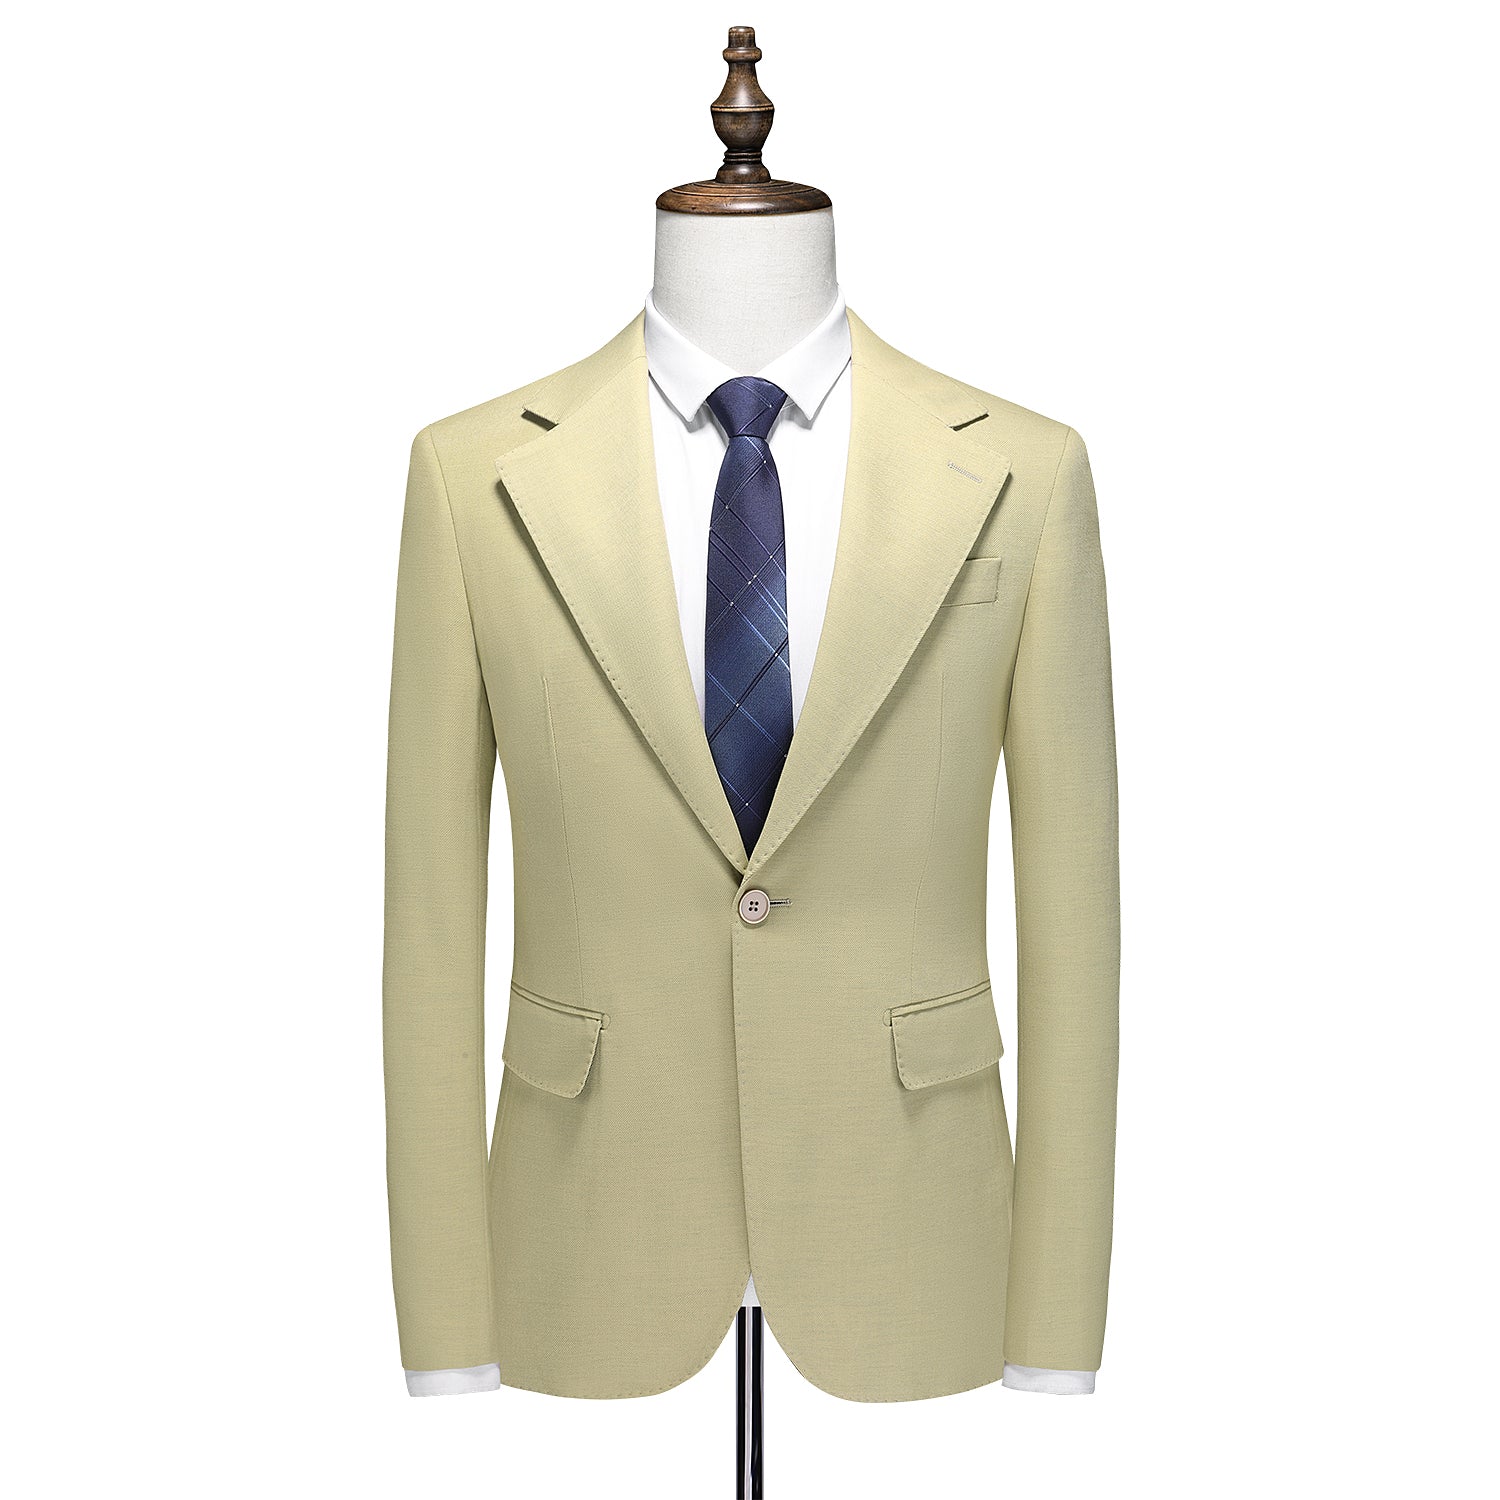 Men's Blazer Light Green Suit Jacket One Button